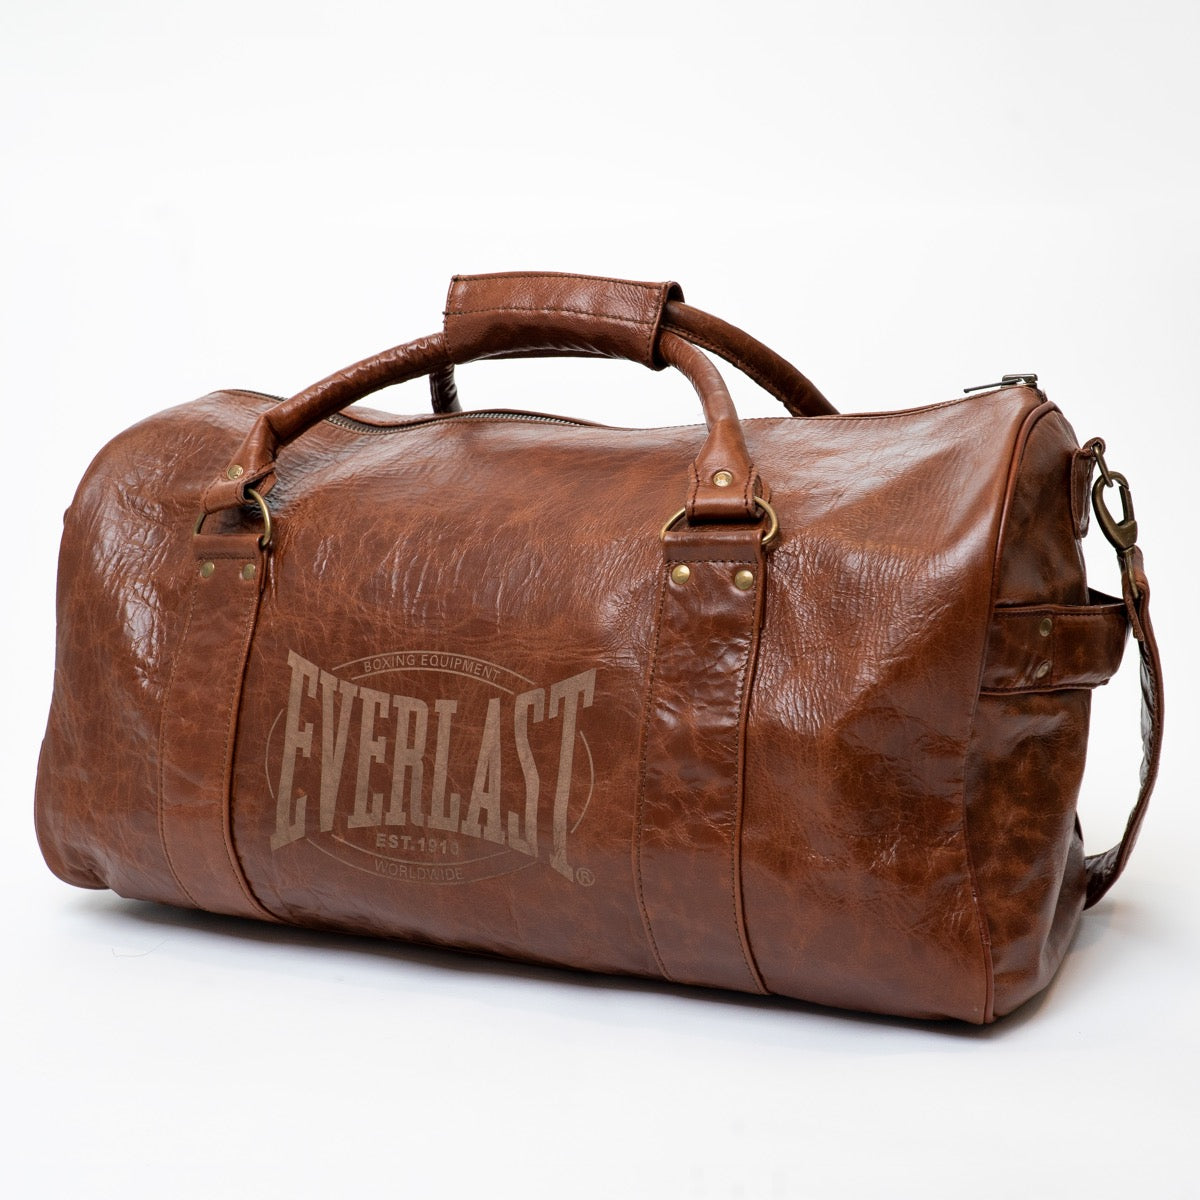 1910 Leather Gym Bag - Everlast